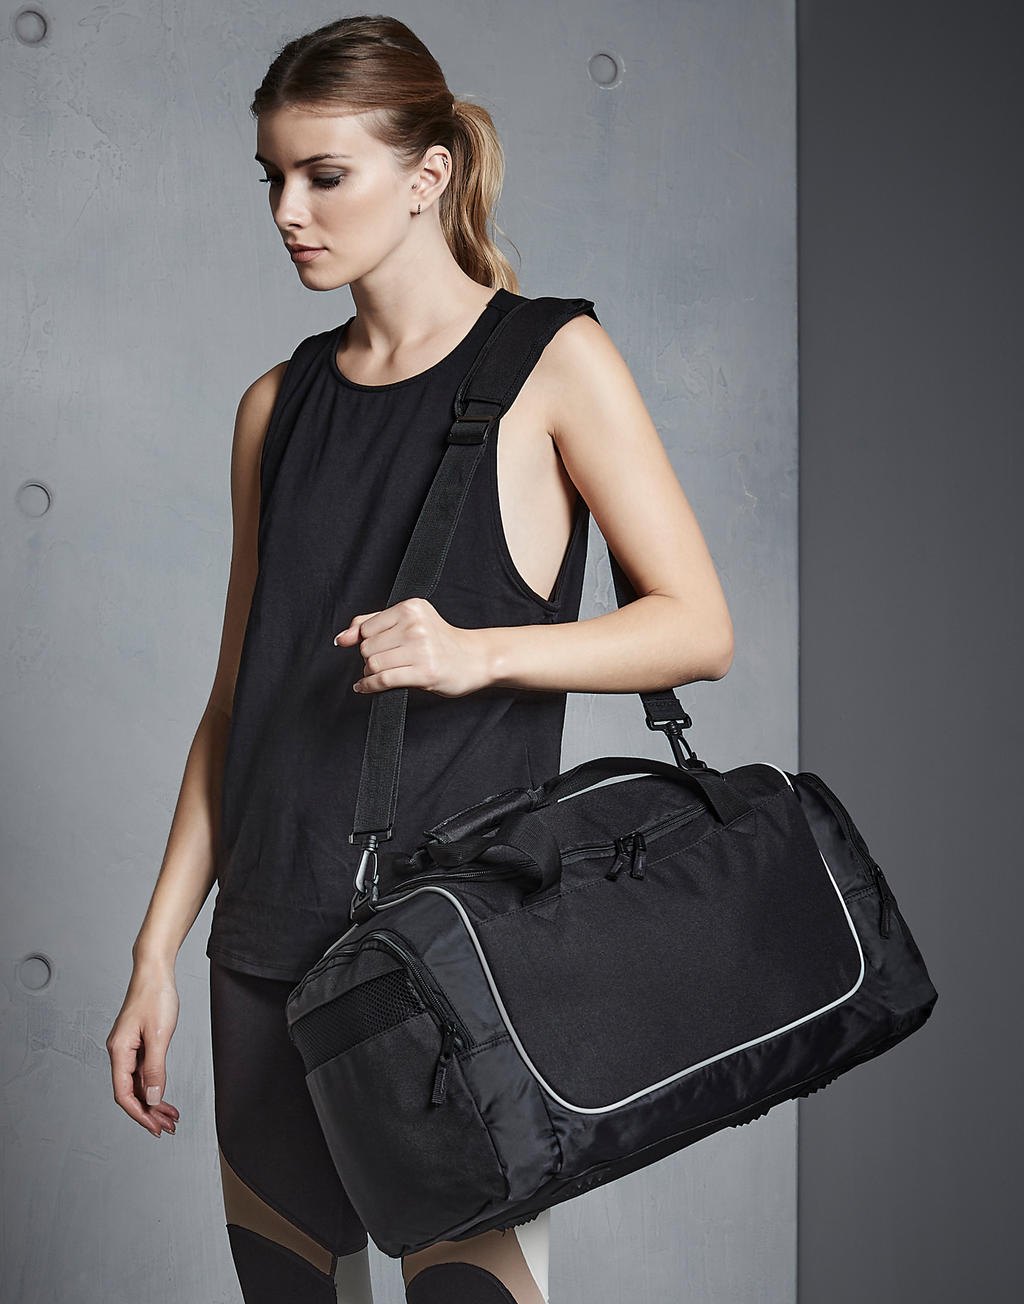  Locker Bag in Farbe Black/Light Grey